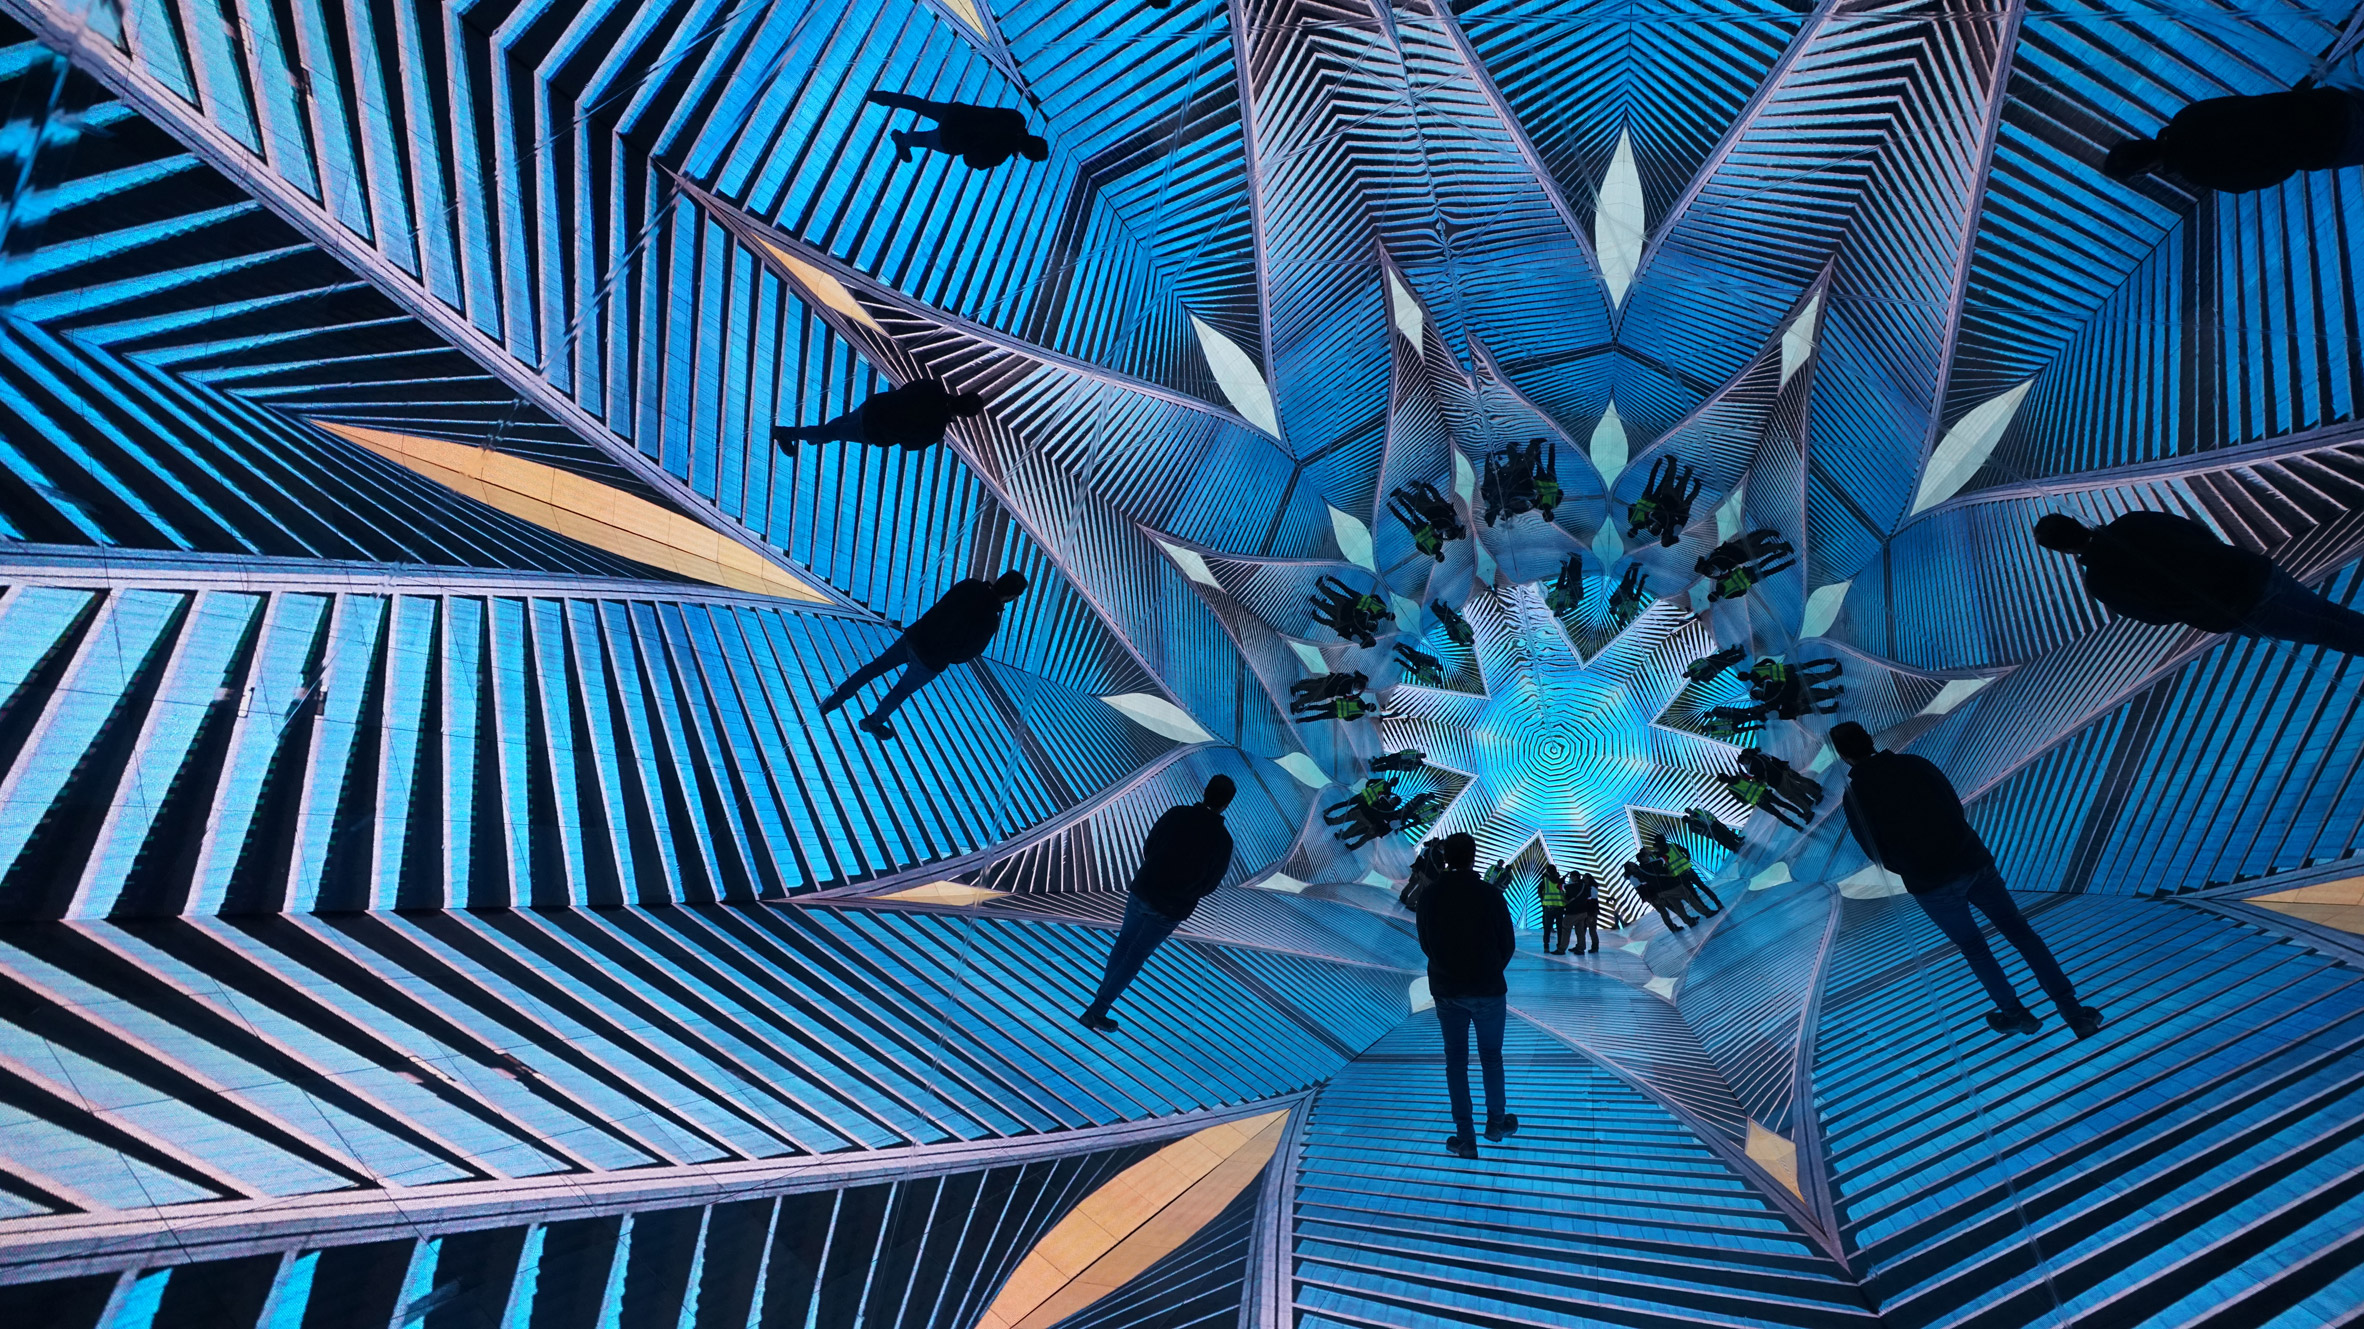 Stufish designs world's largest kaleidoscope in Saudi Arabia